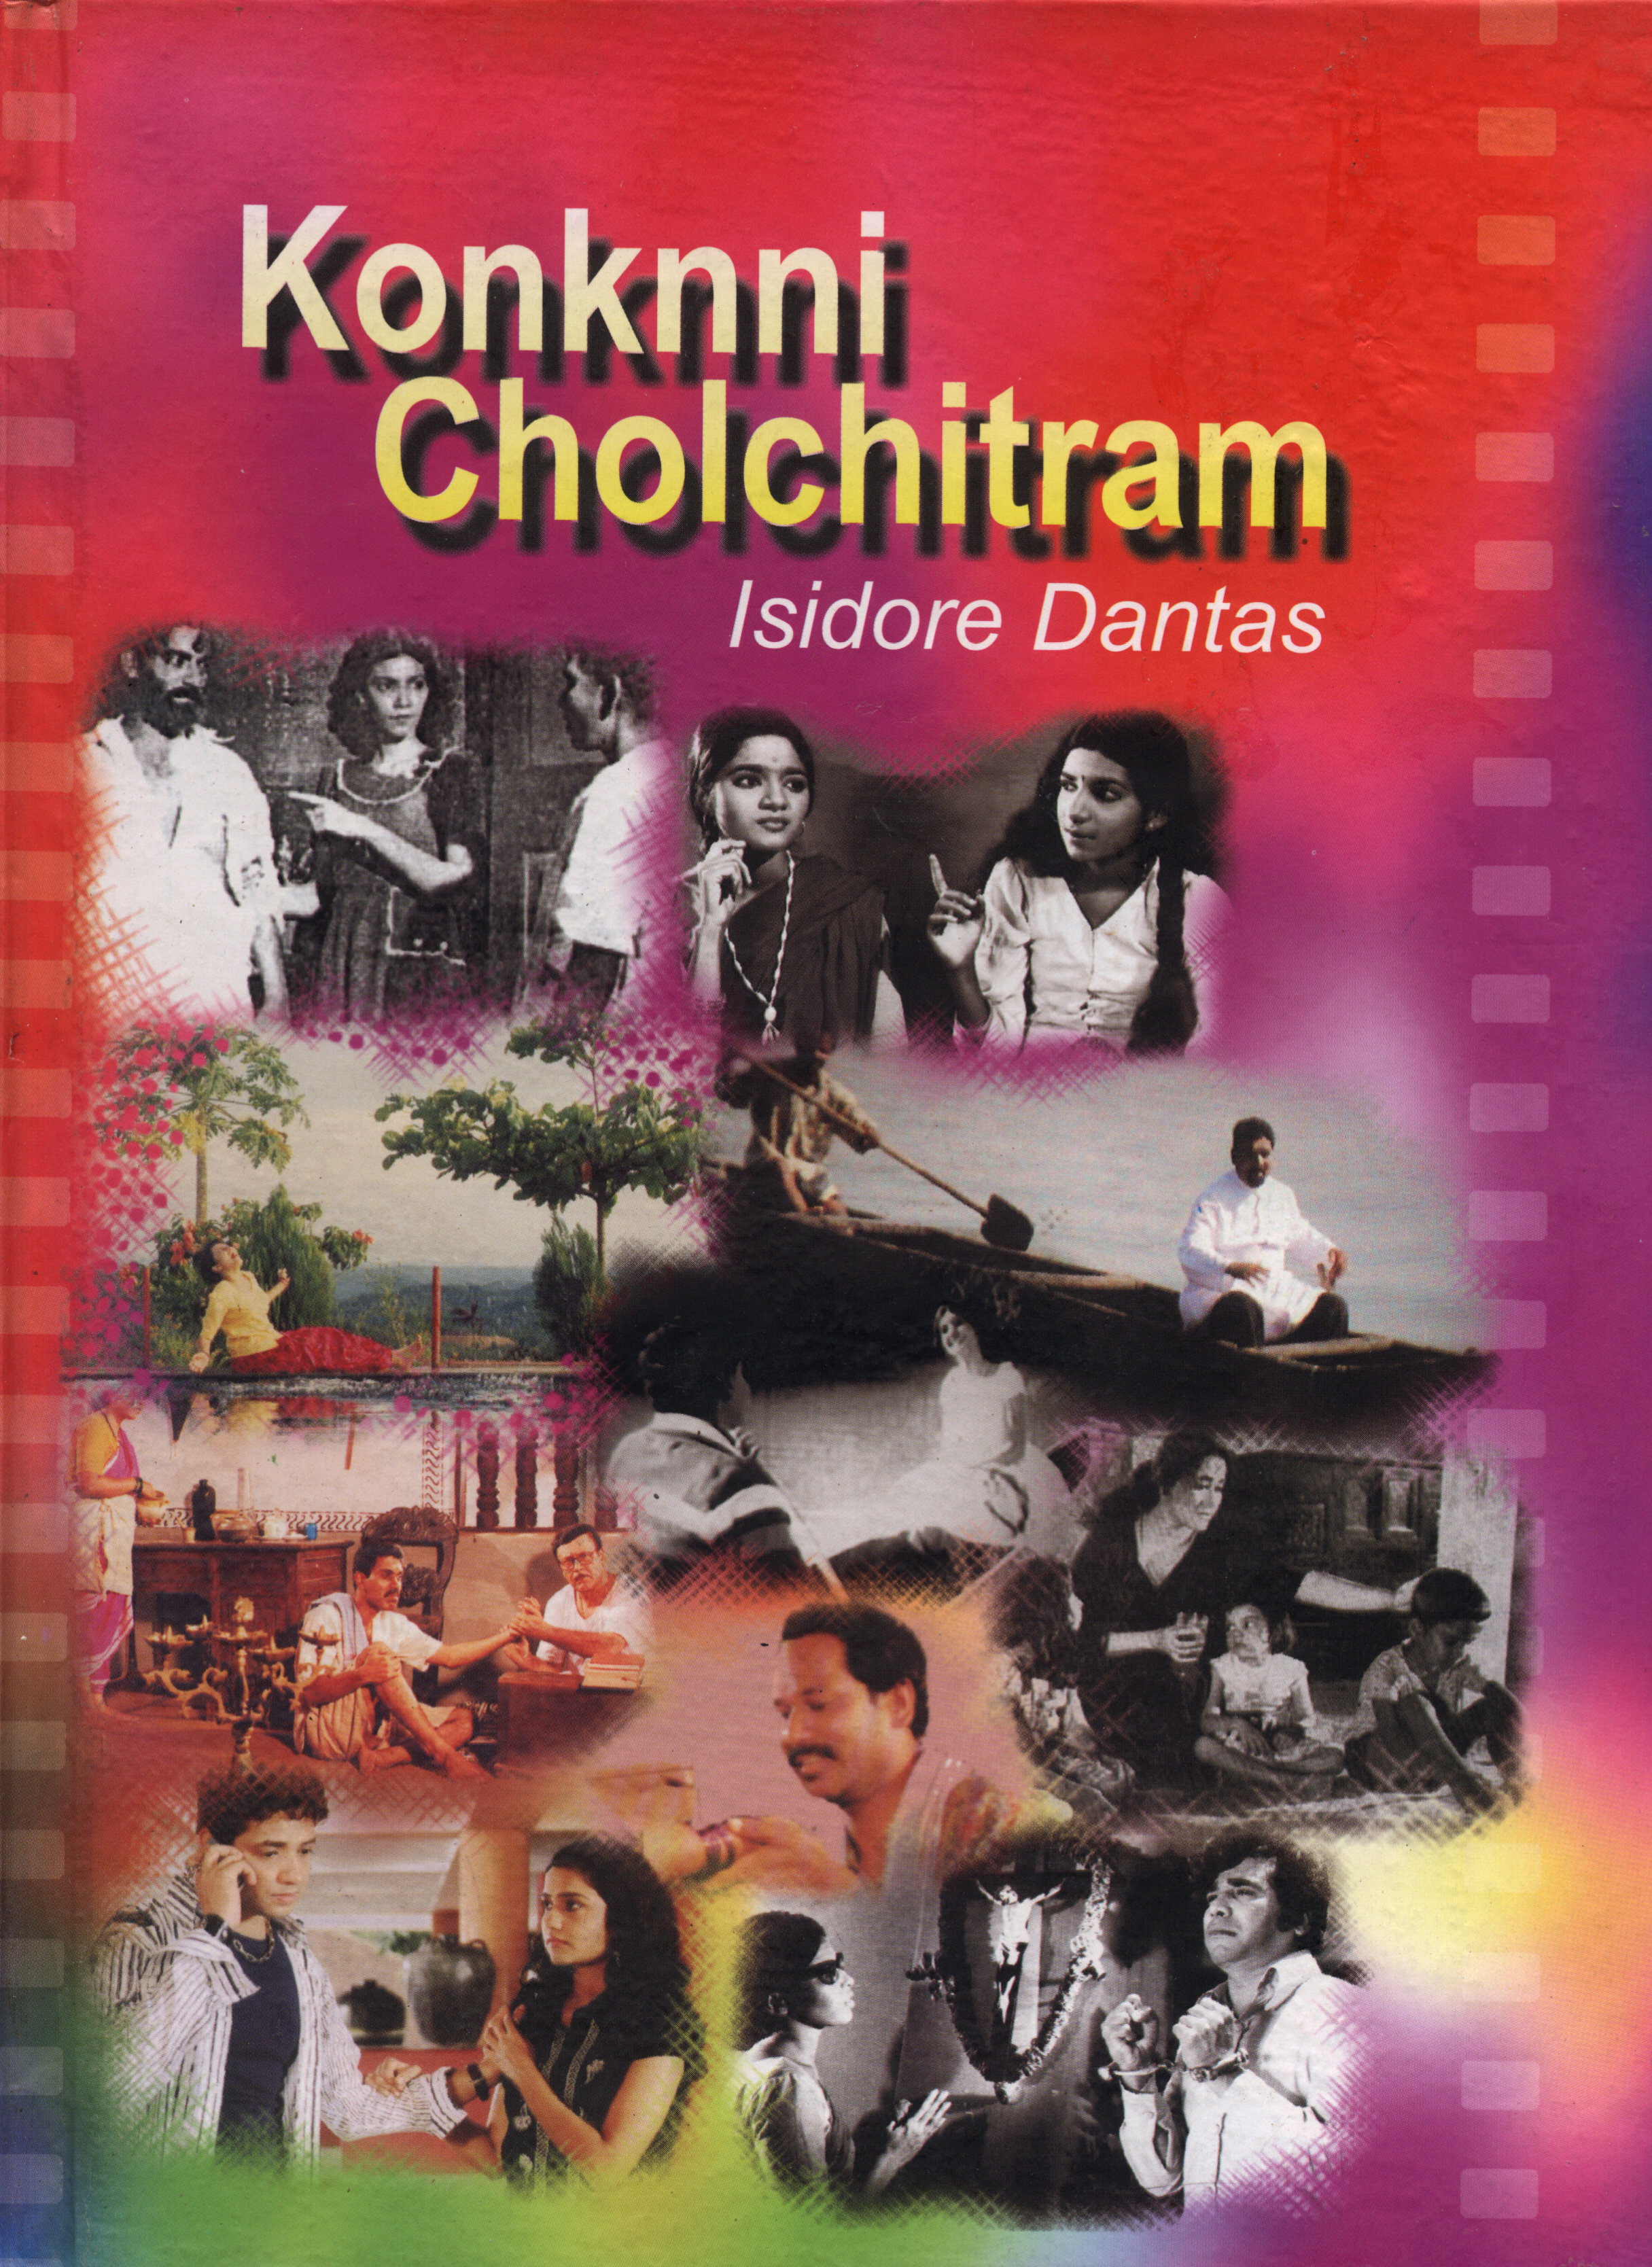 Konknni Cholchitram